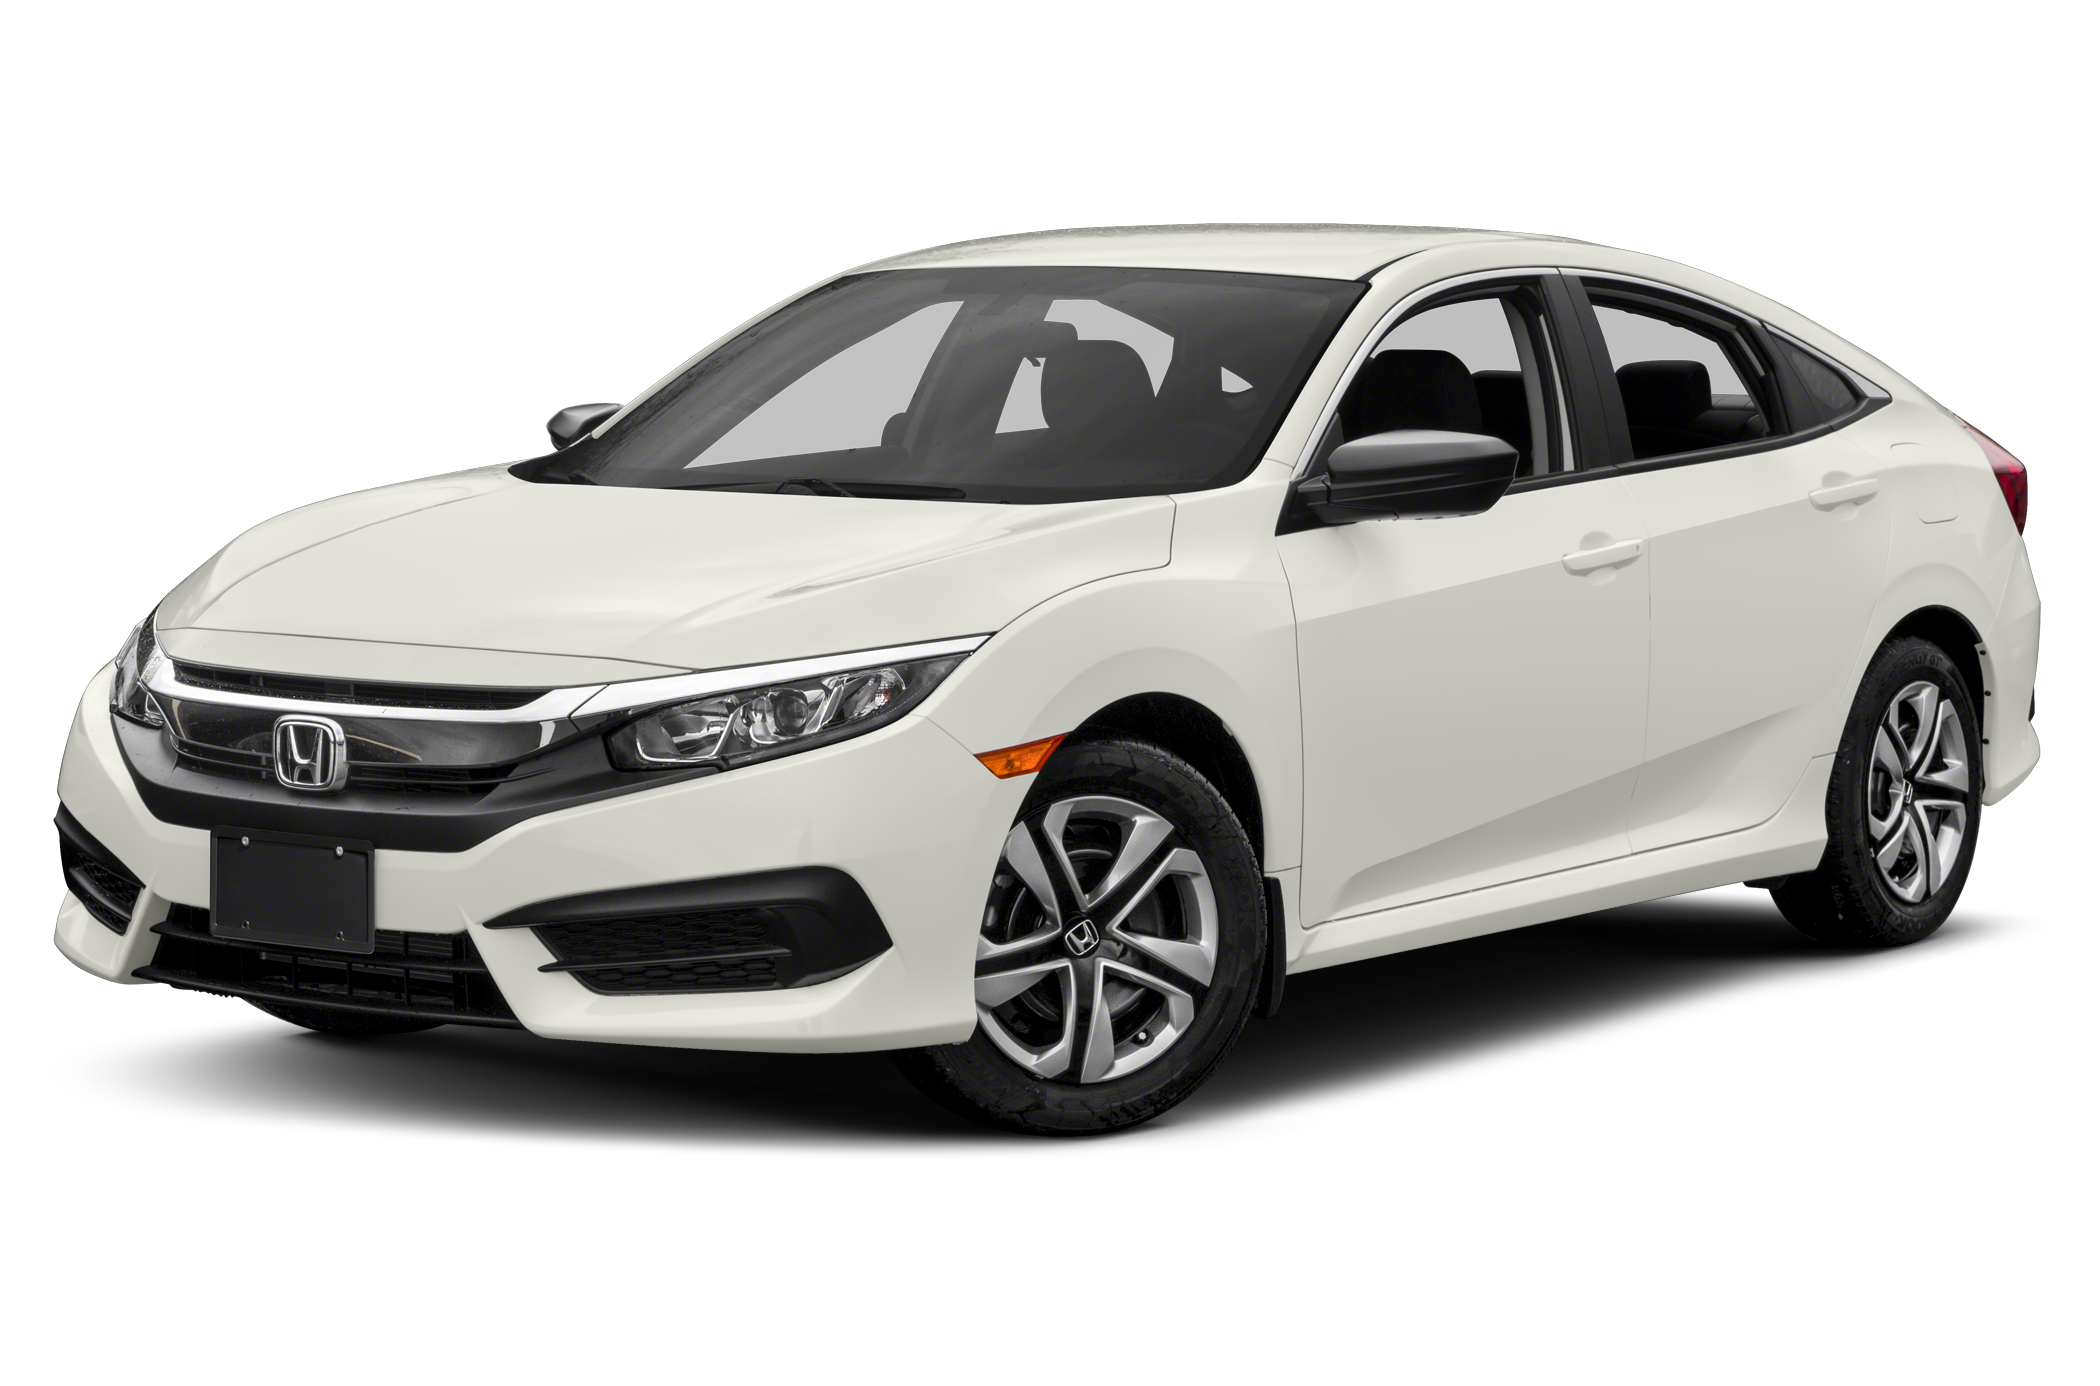 2017 Honda Civic View Specs, Prices & Photos WHEELS.ca